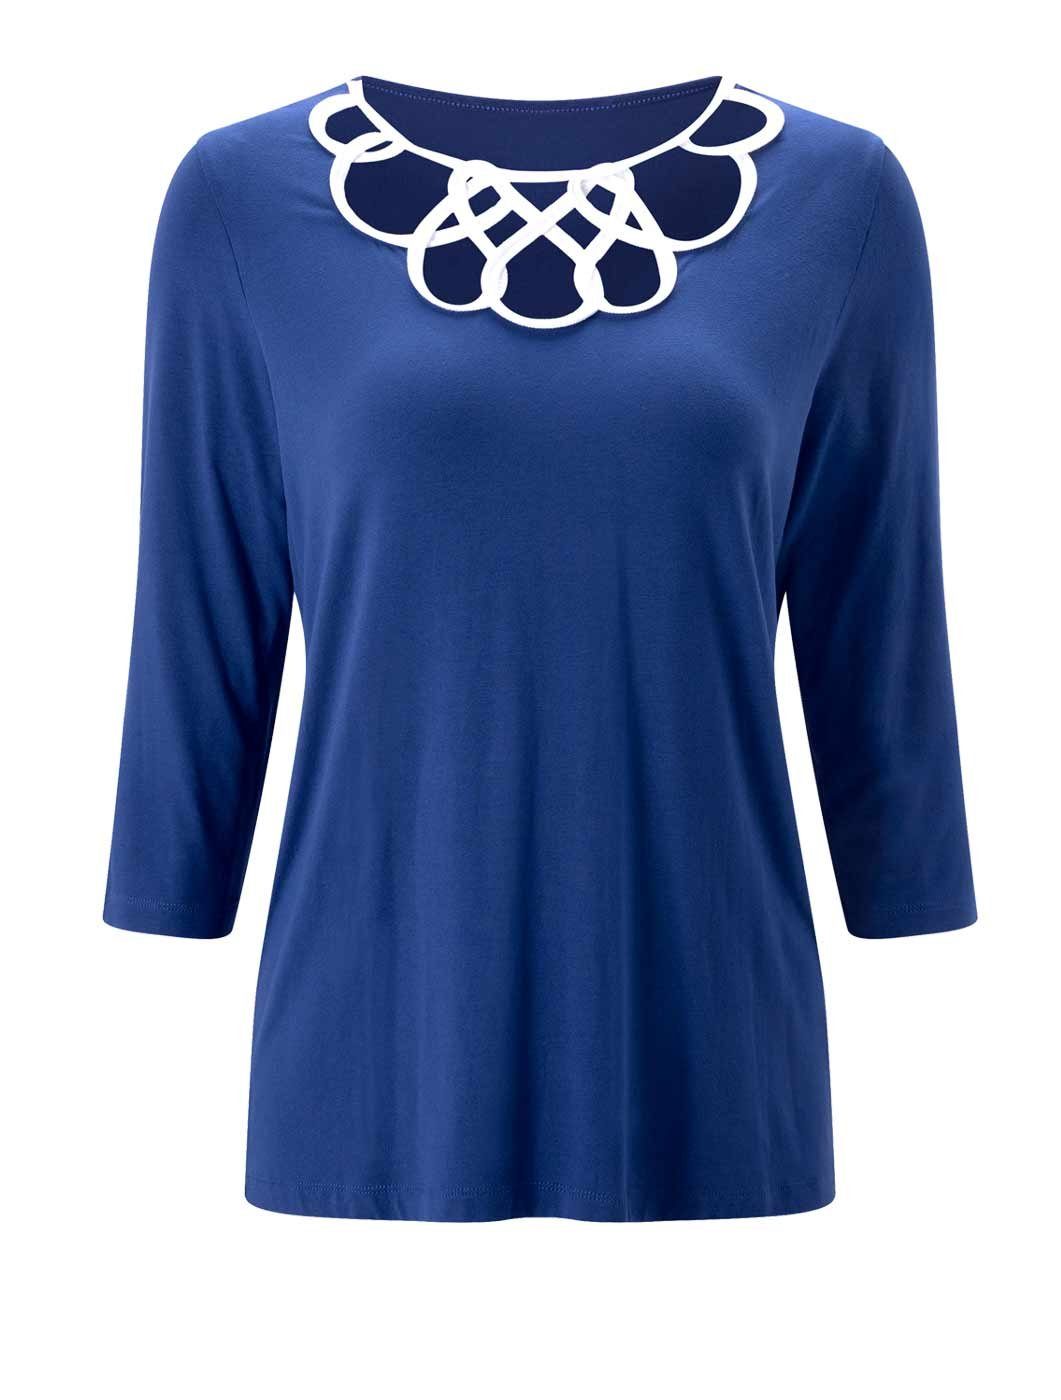 L Damen creation T-Shirt royalblau-weiß CRéATION Jerseyshirt, L